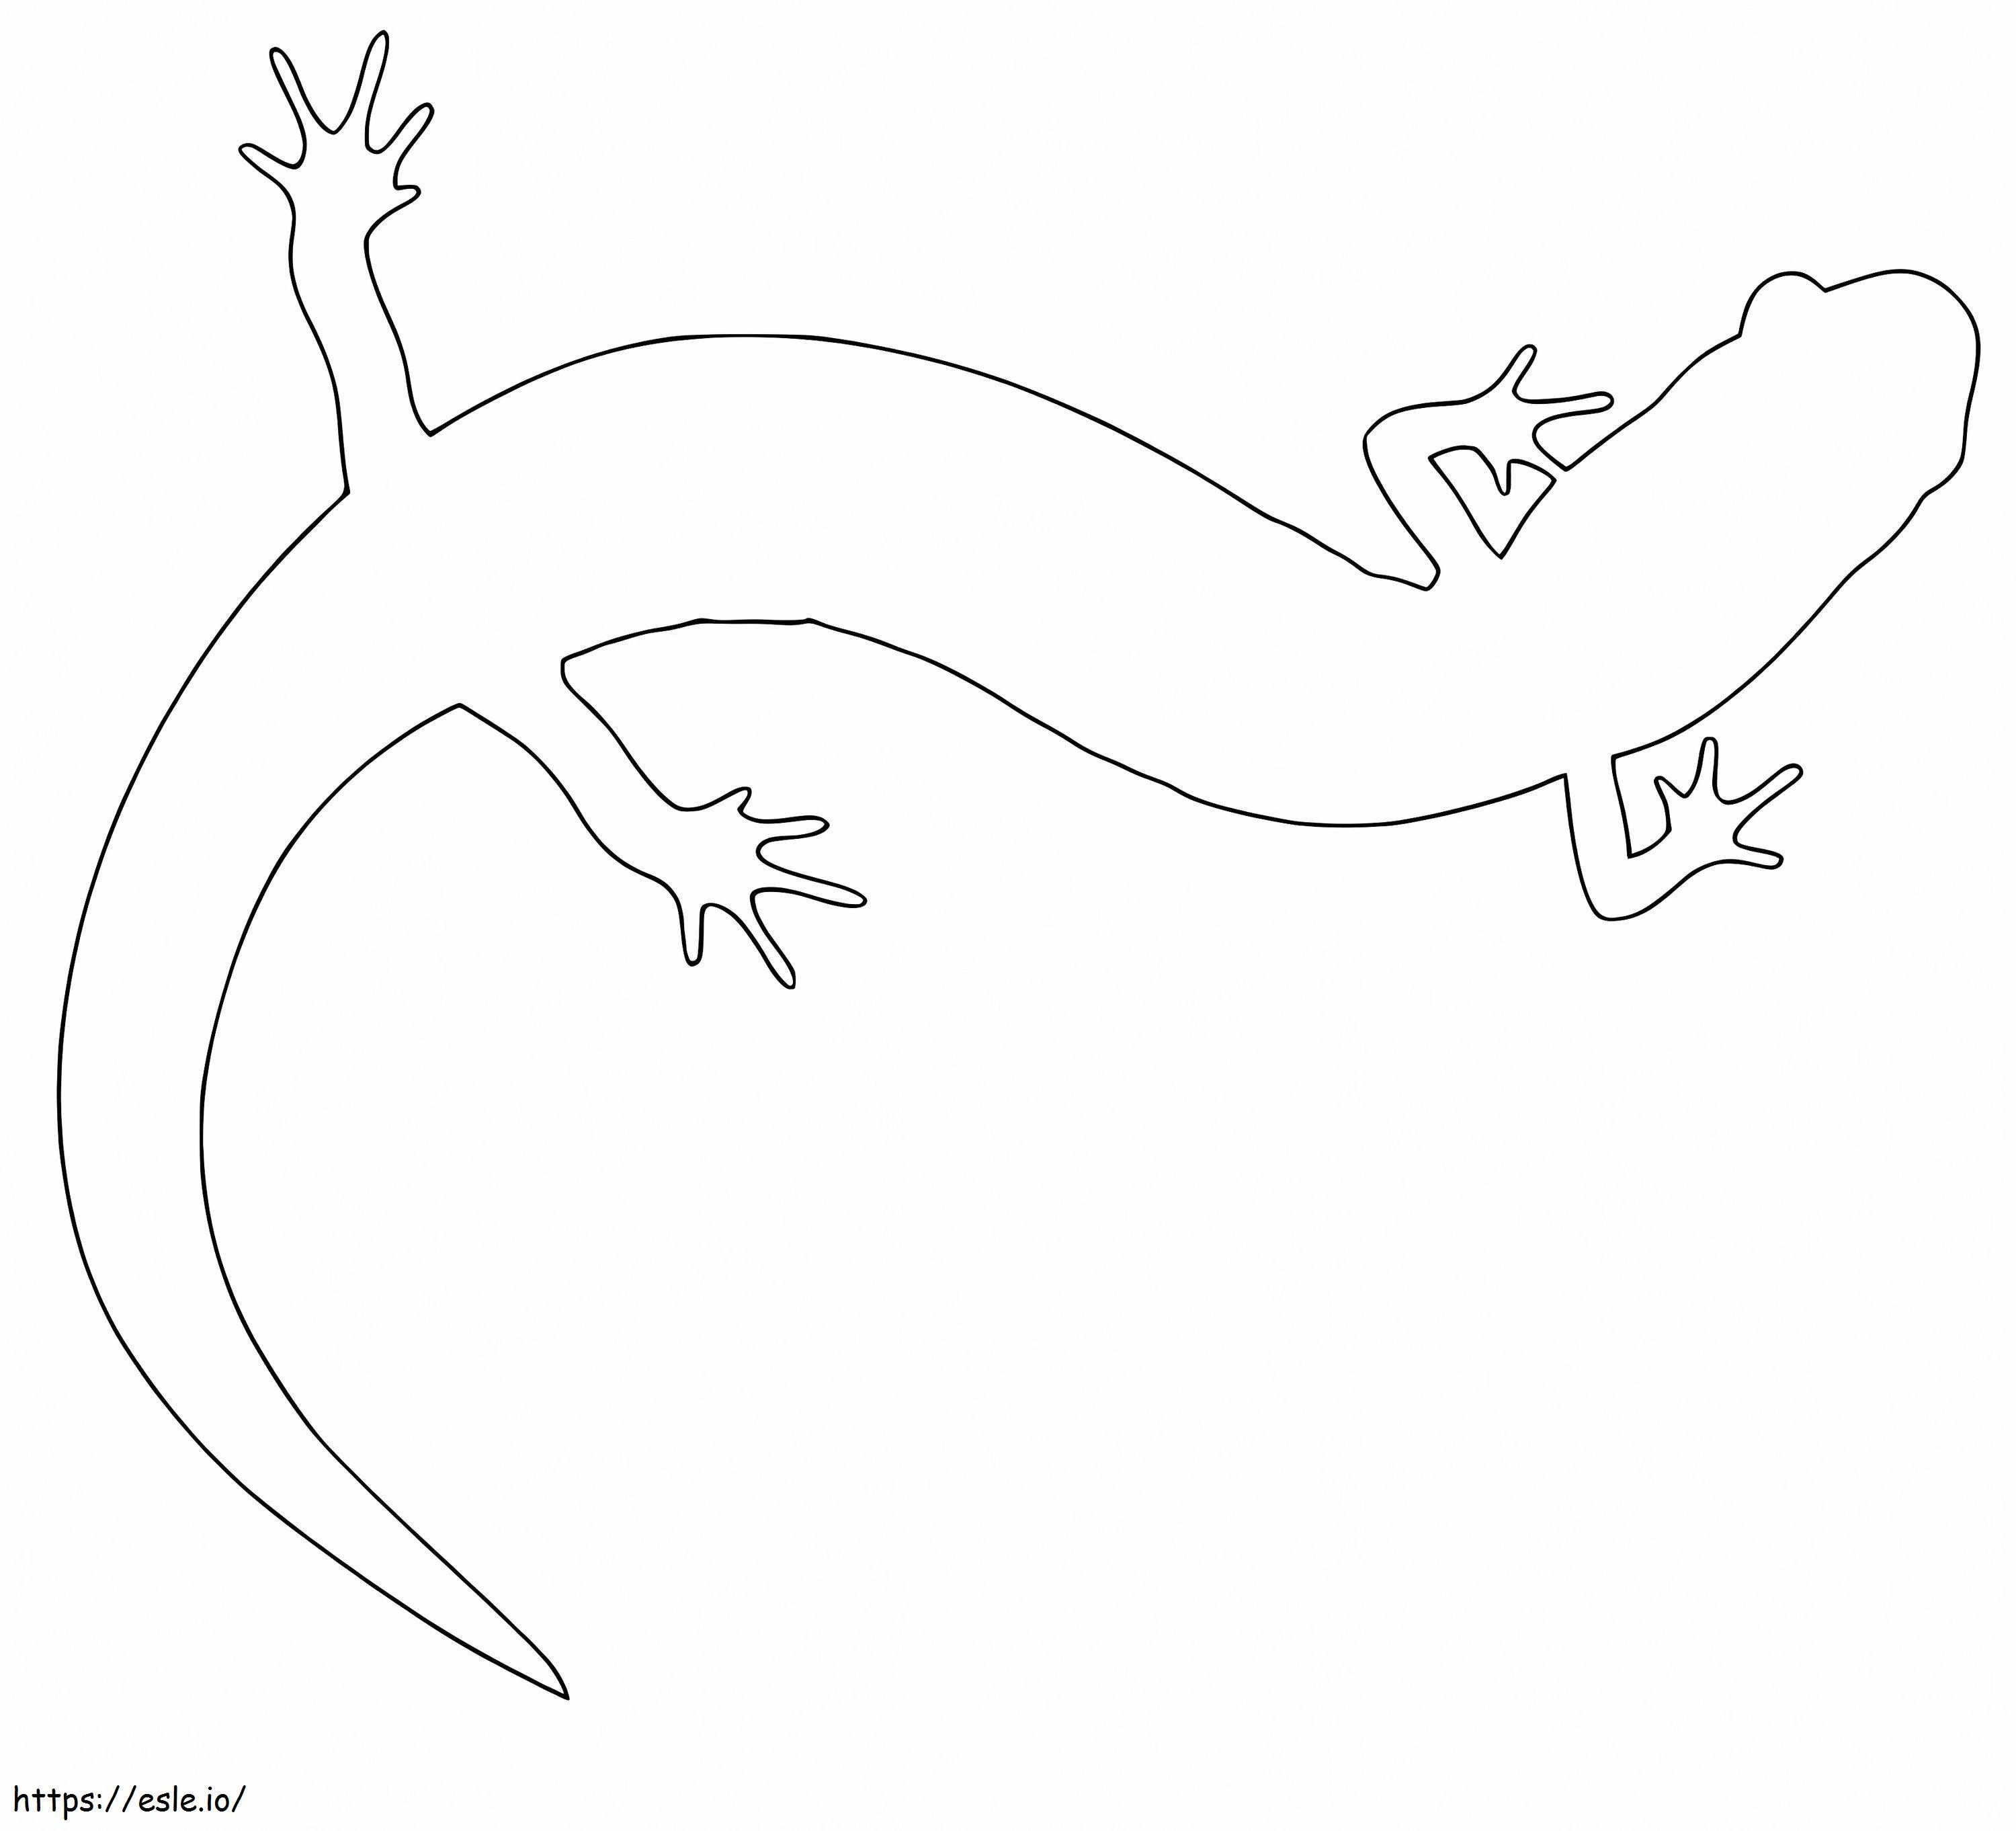 Salamander Outline coloring page